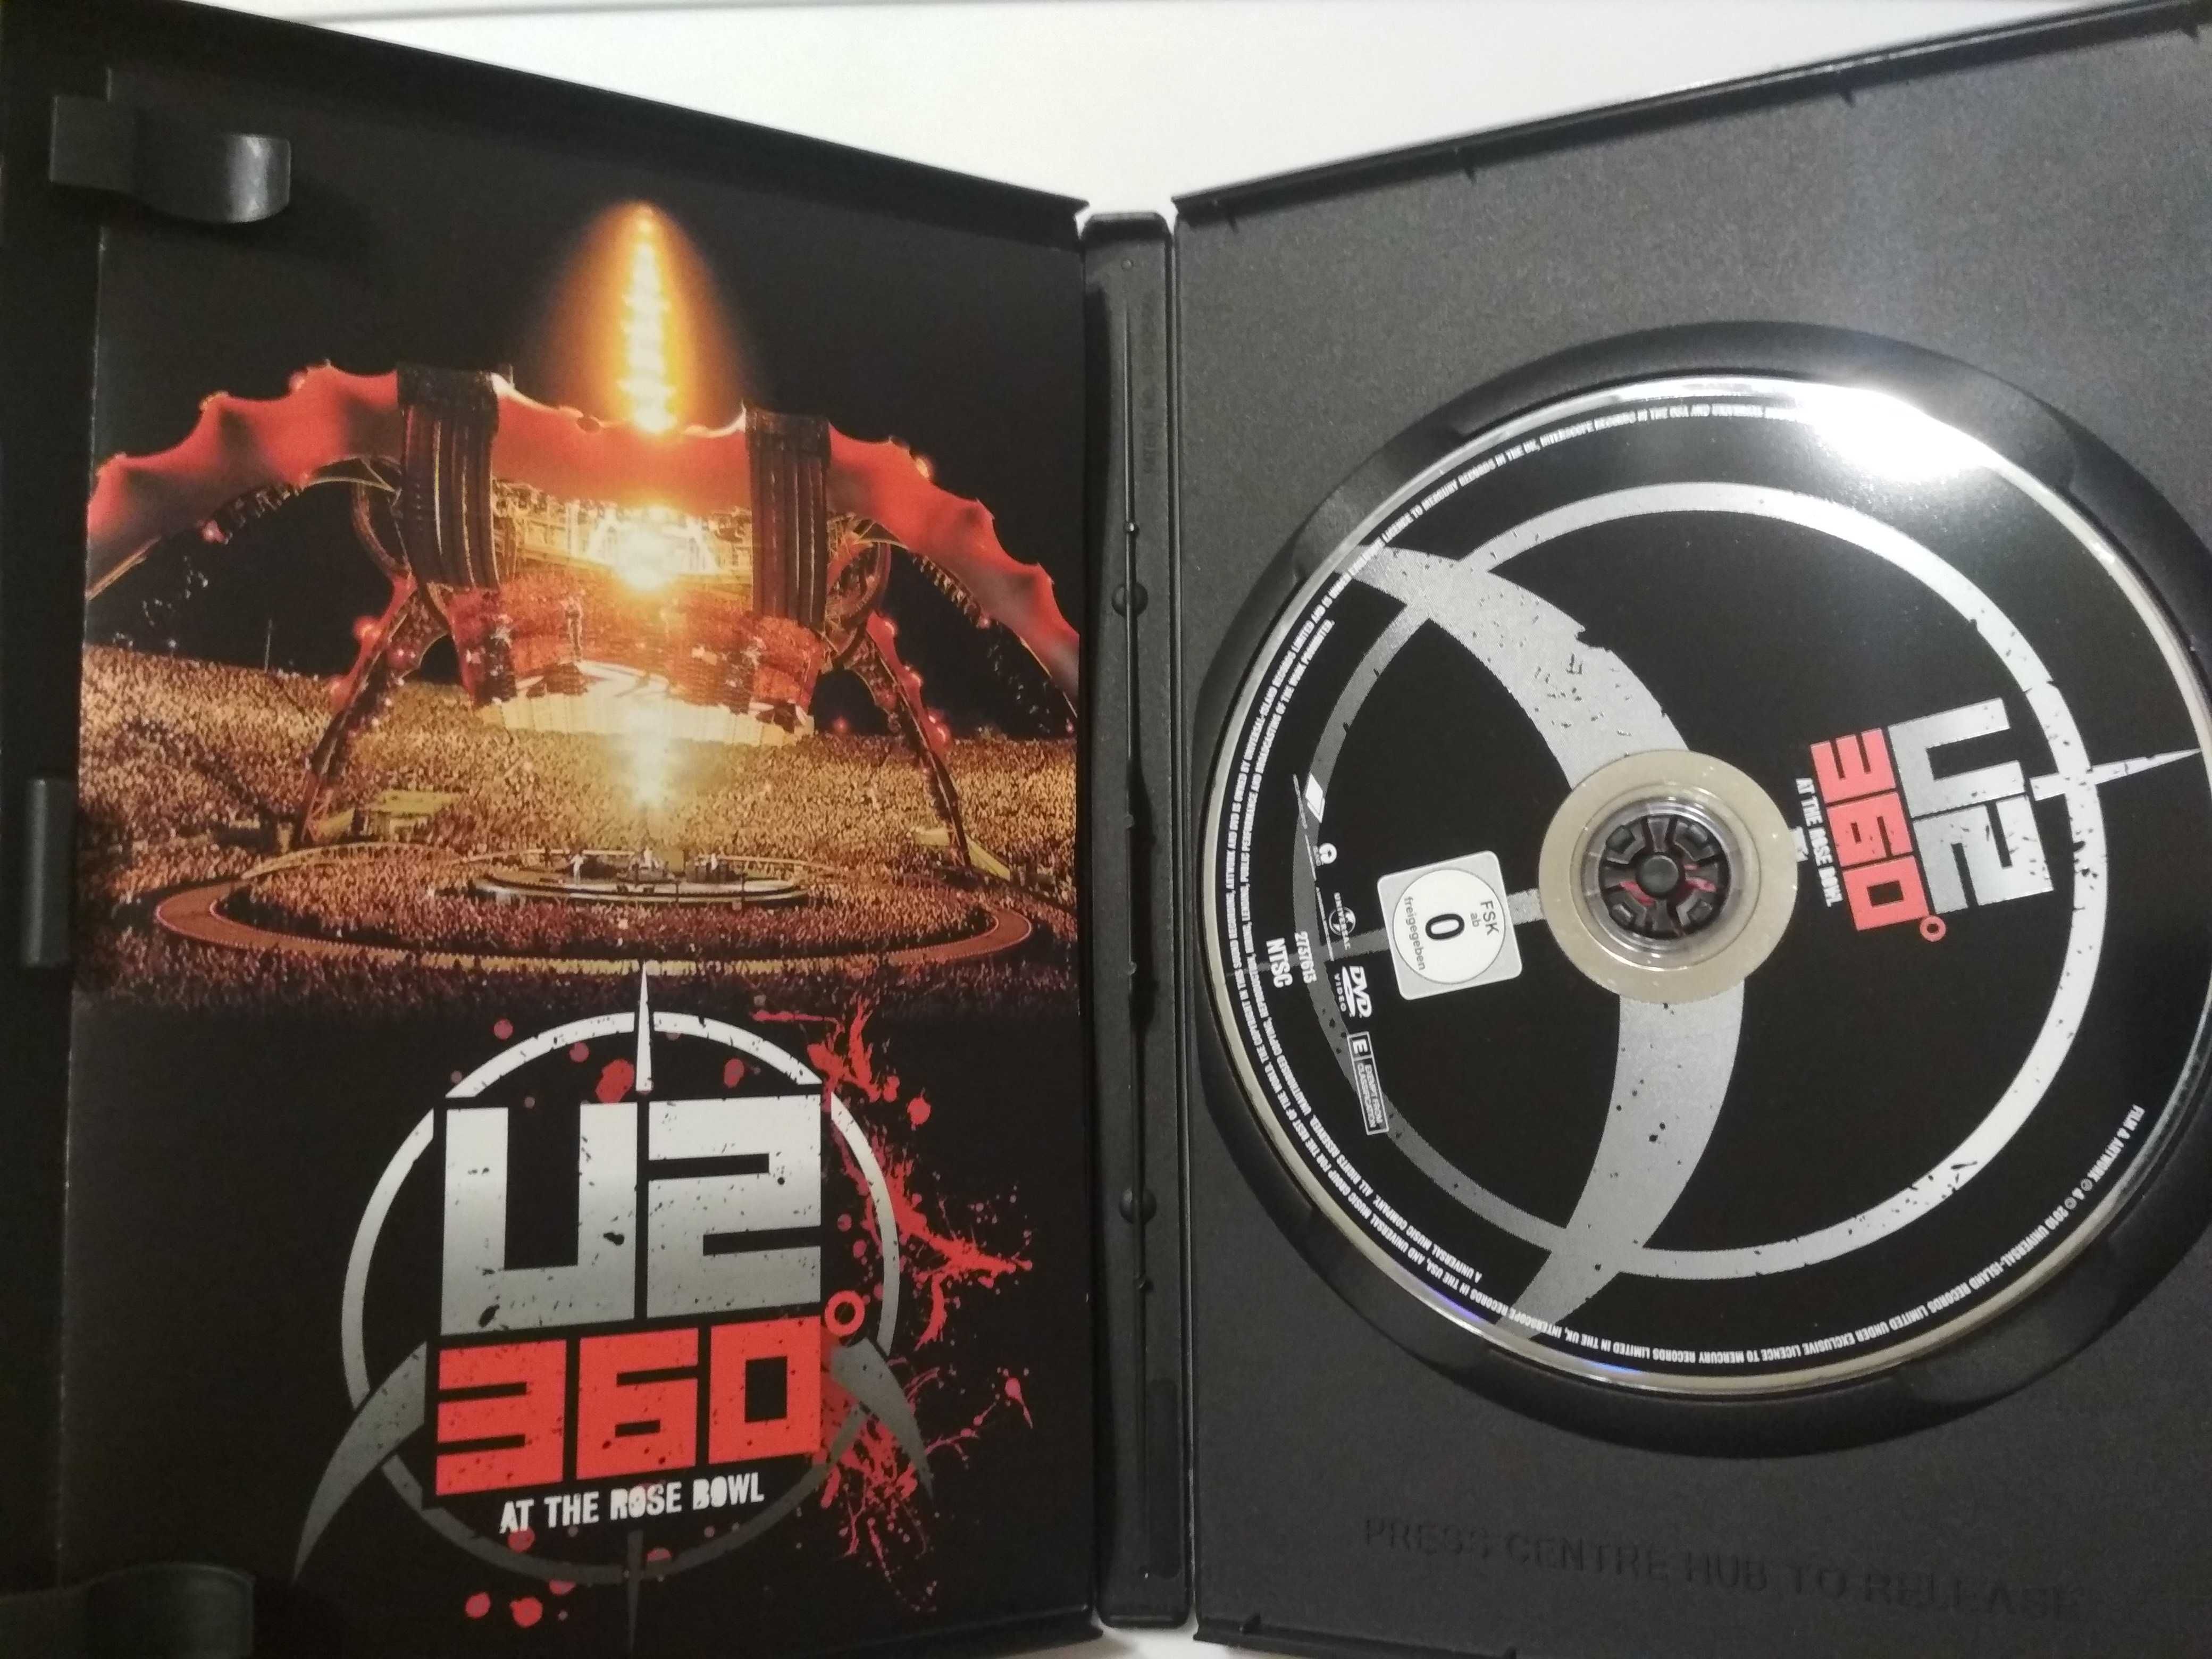 DVD Koncert U2 w Pasadena Rose Bowl